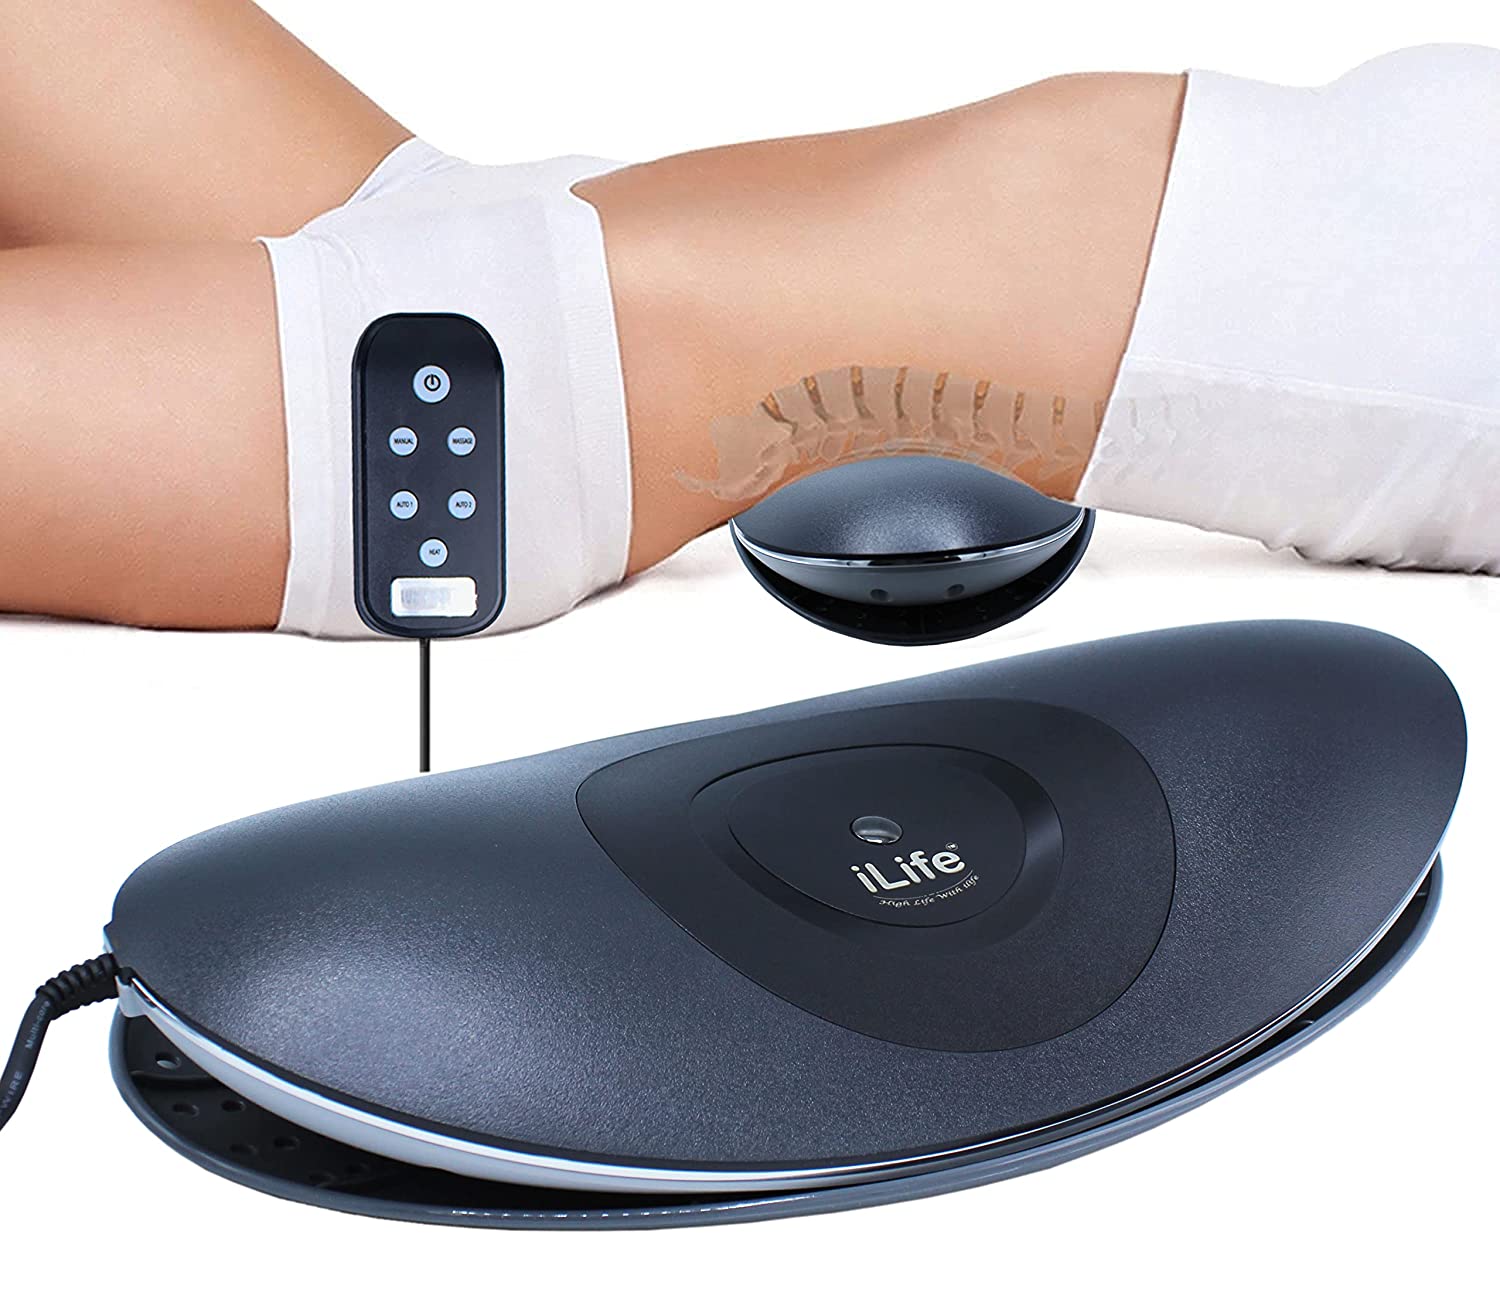  Lumbar Traction Device; back massager, massager